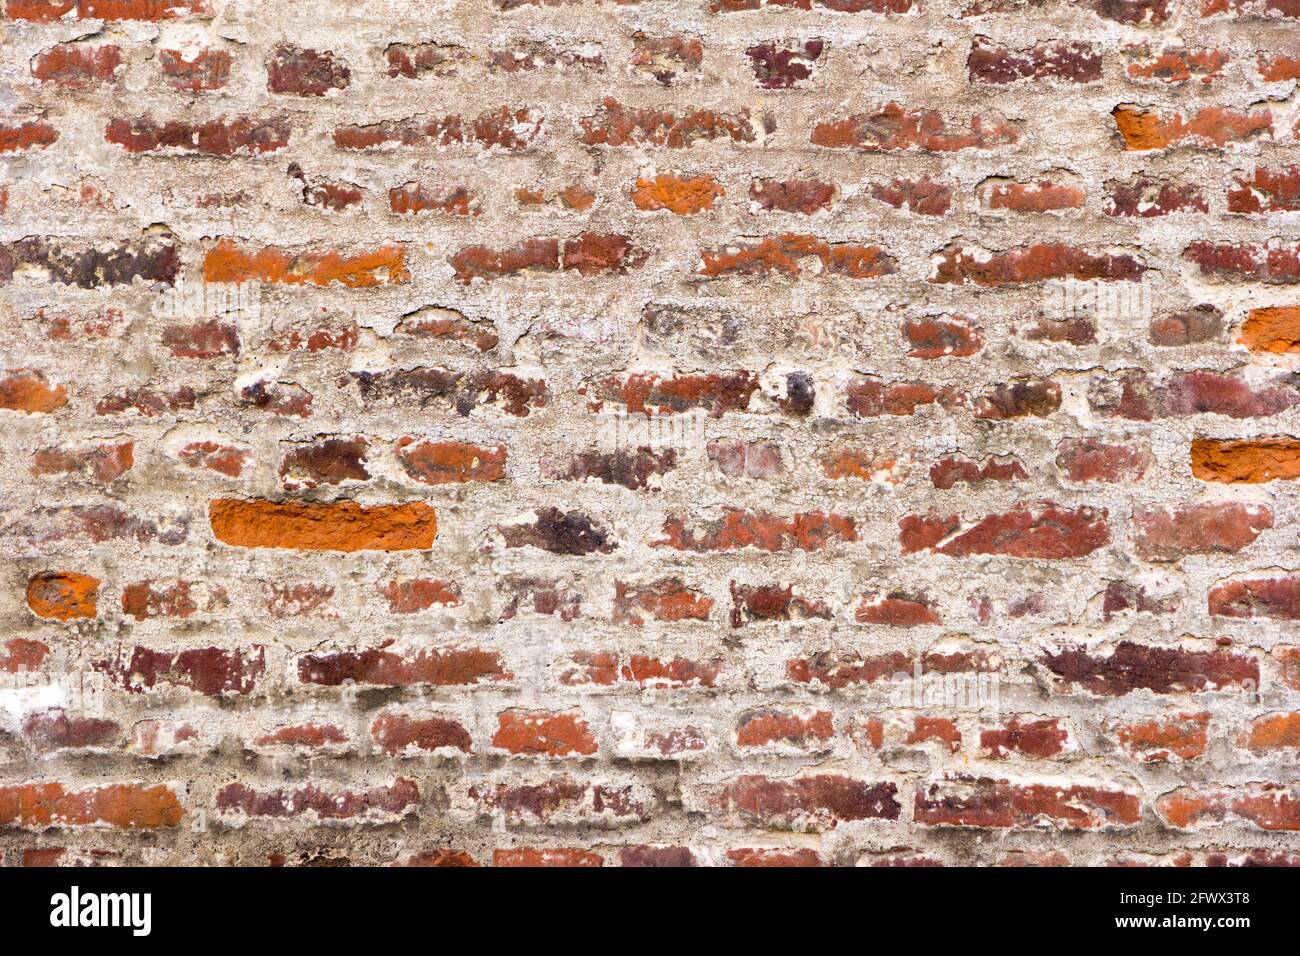 brick wall as a texture Stock Photo